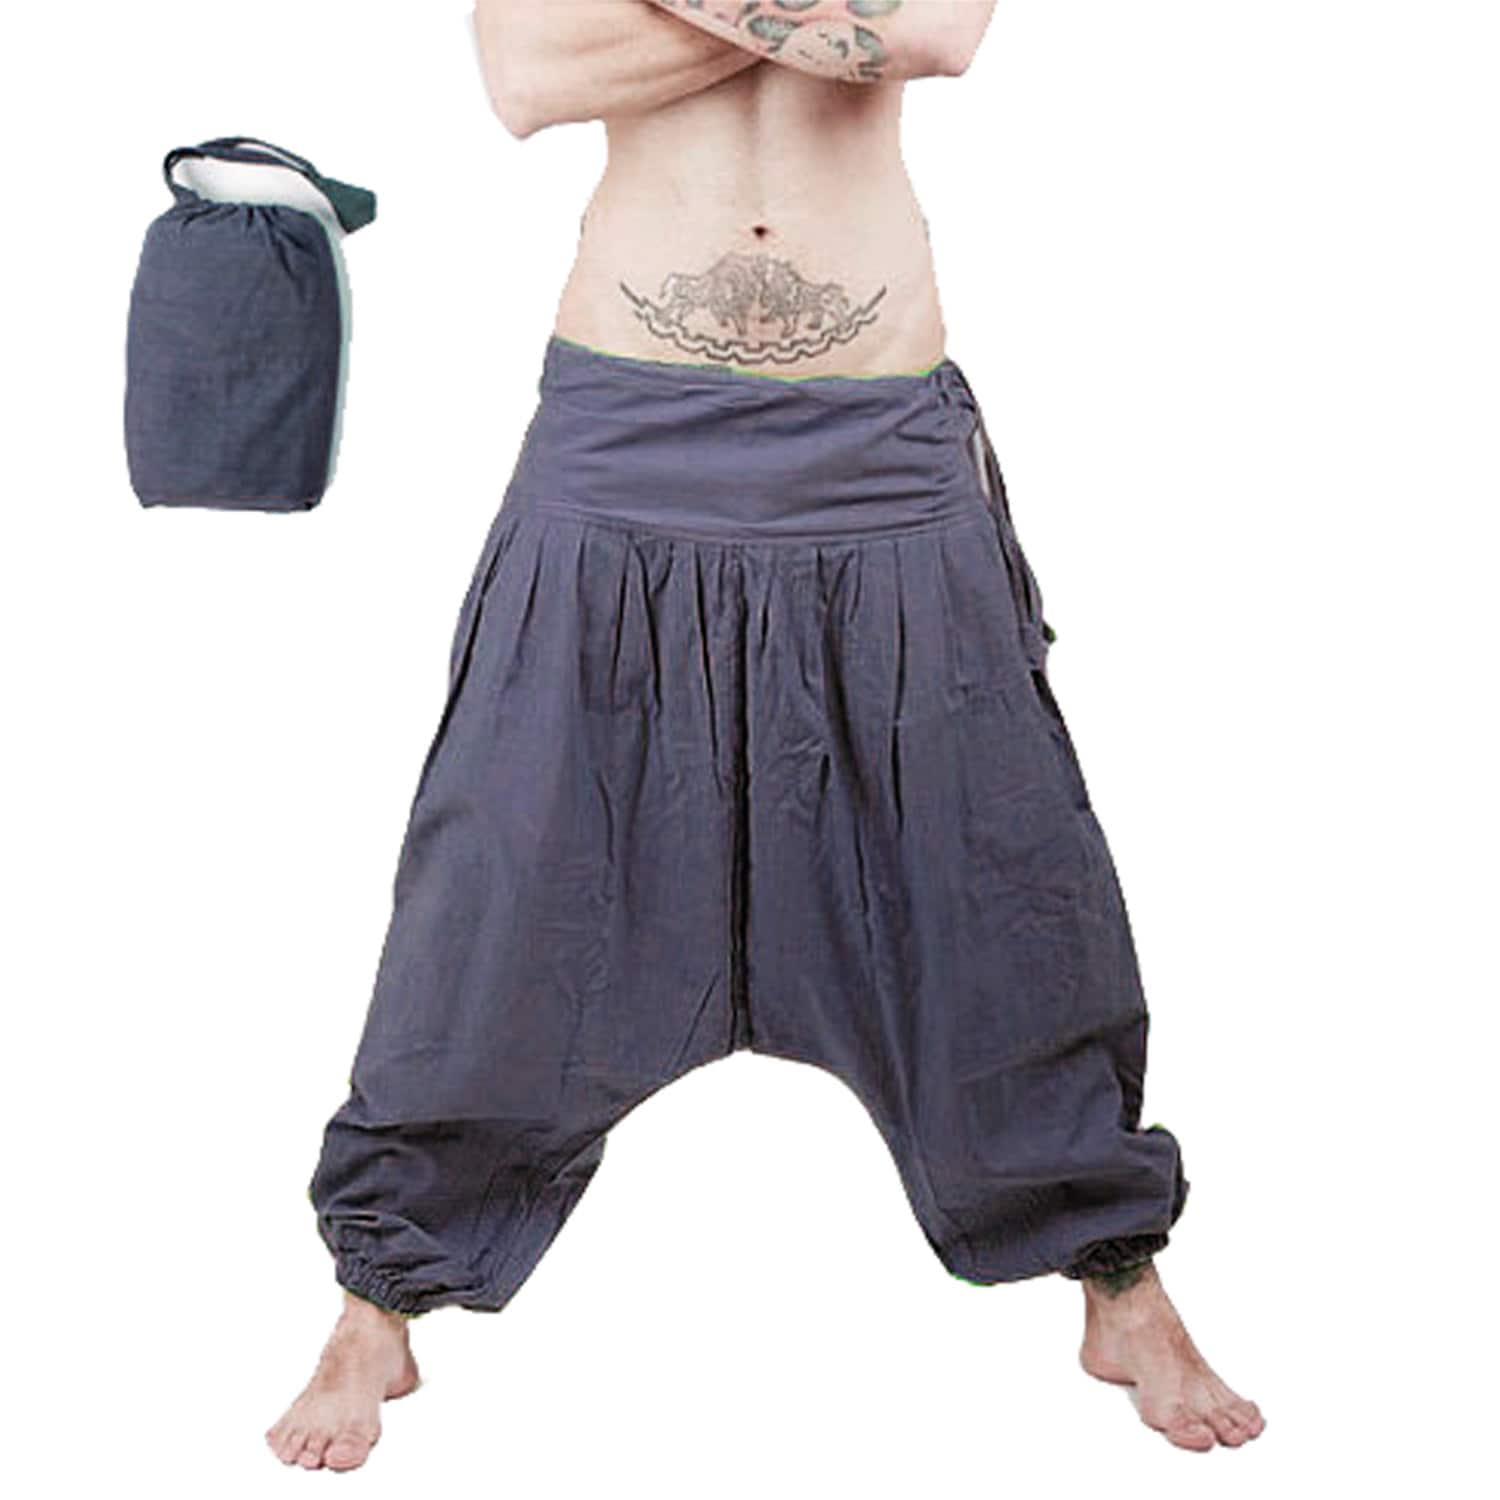 Men's Harem Pants Plain Aladdin Pants Yoga Pants by manaKAmana